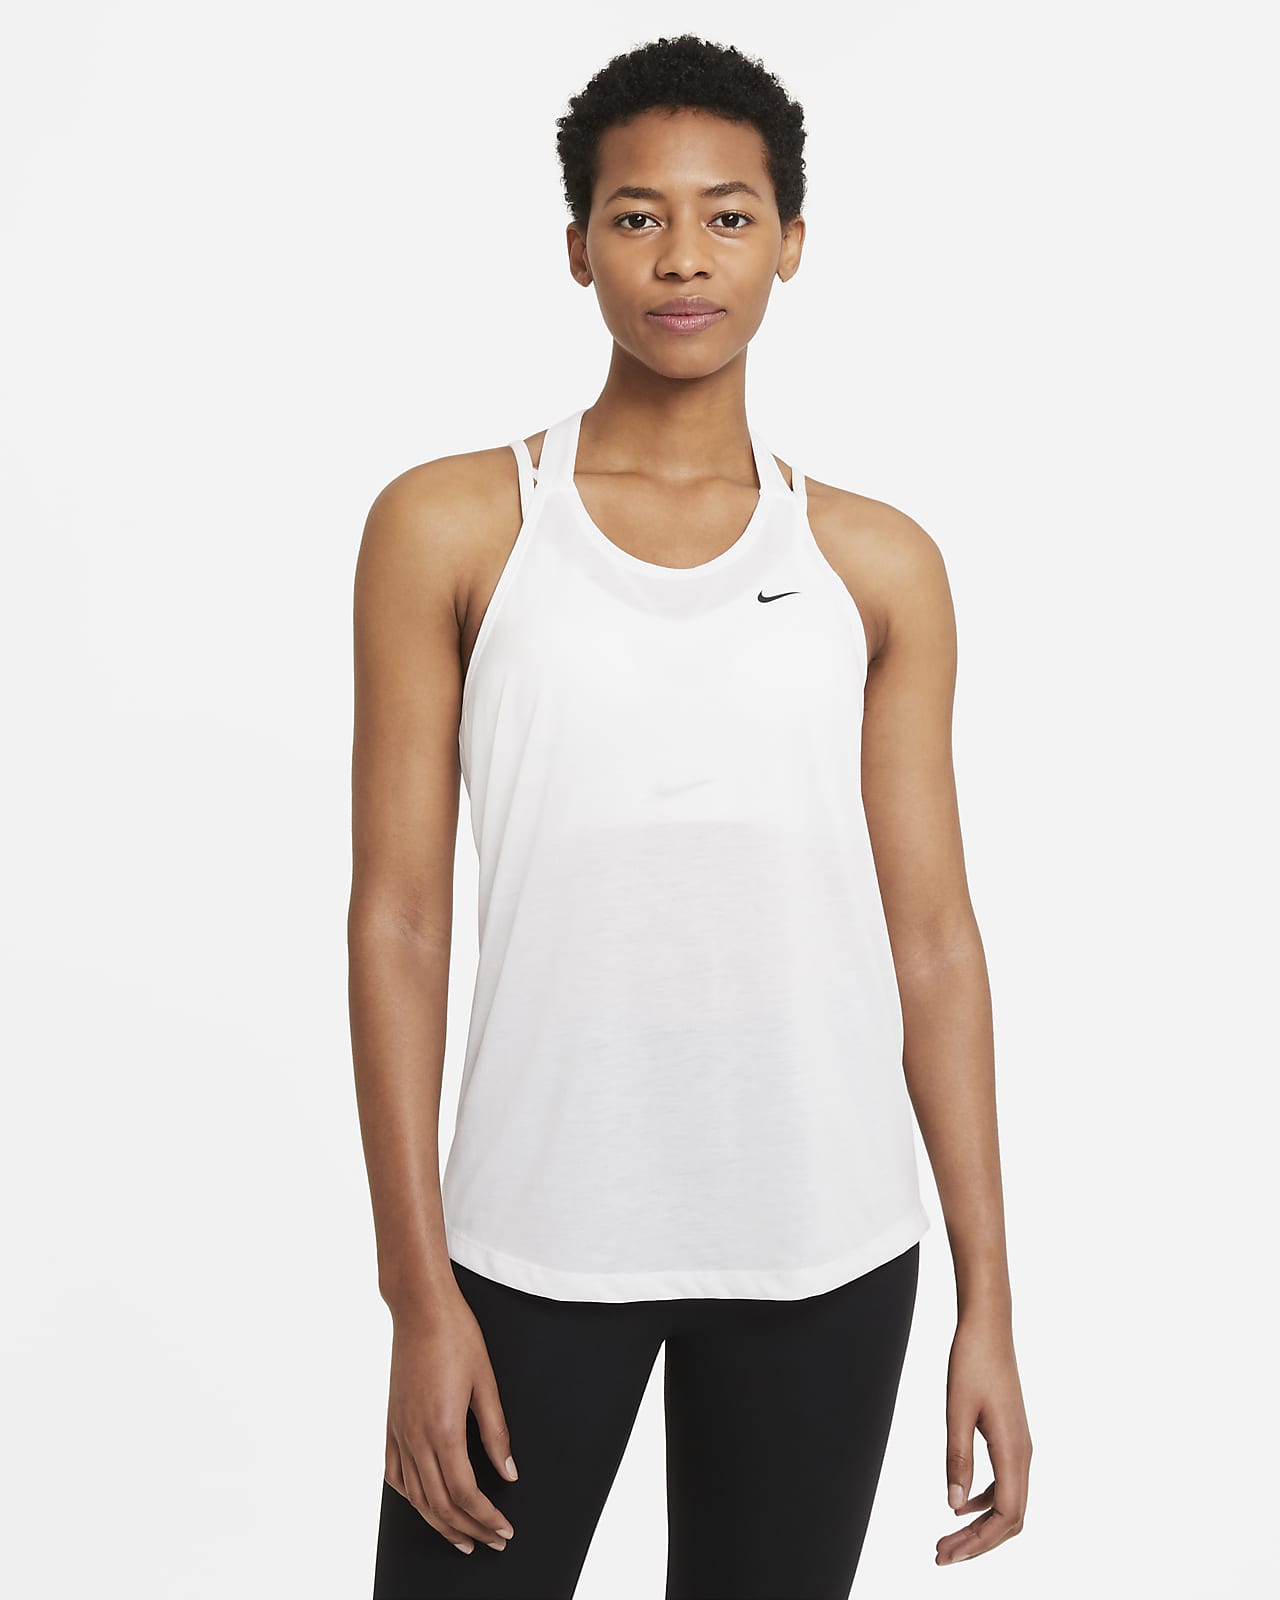 Women's Tank Tops & Sleeveless Tops. Nike ZA